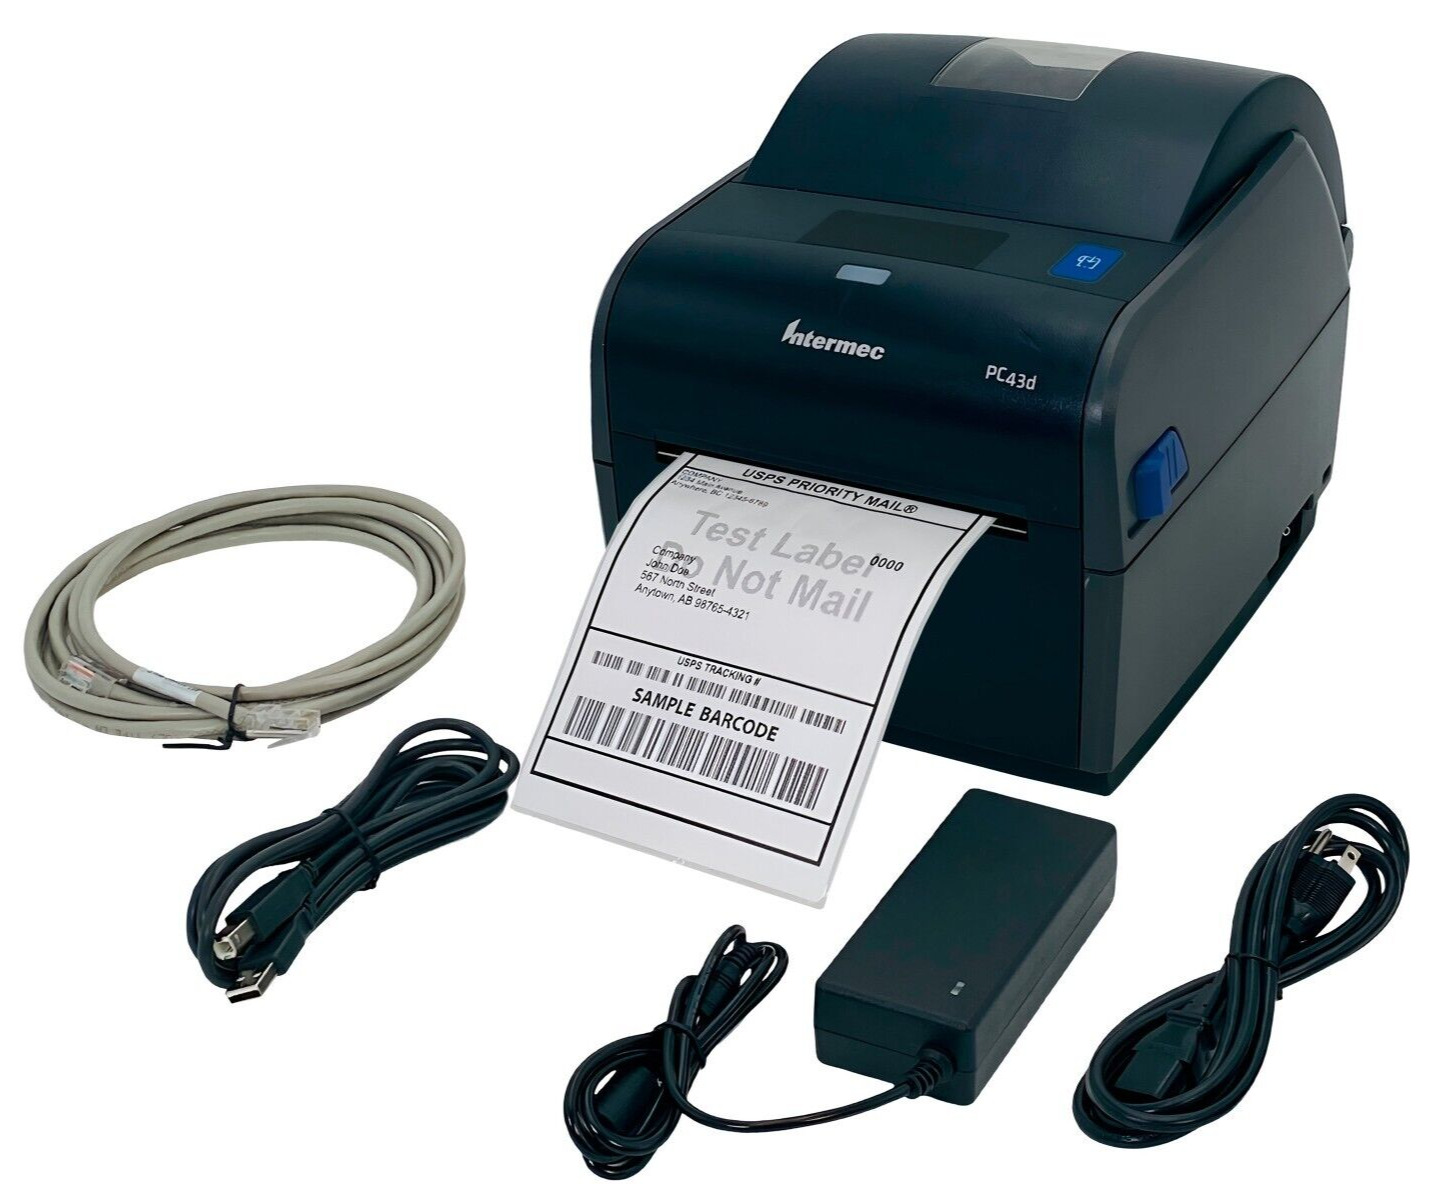 Intermec PC43d Thermal 4x6 Label Printer for E-commerce eBay Amazon Shopify